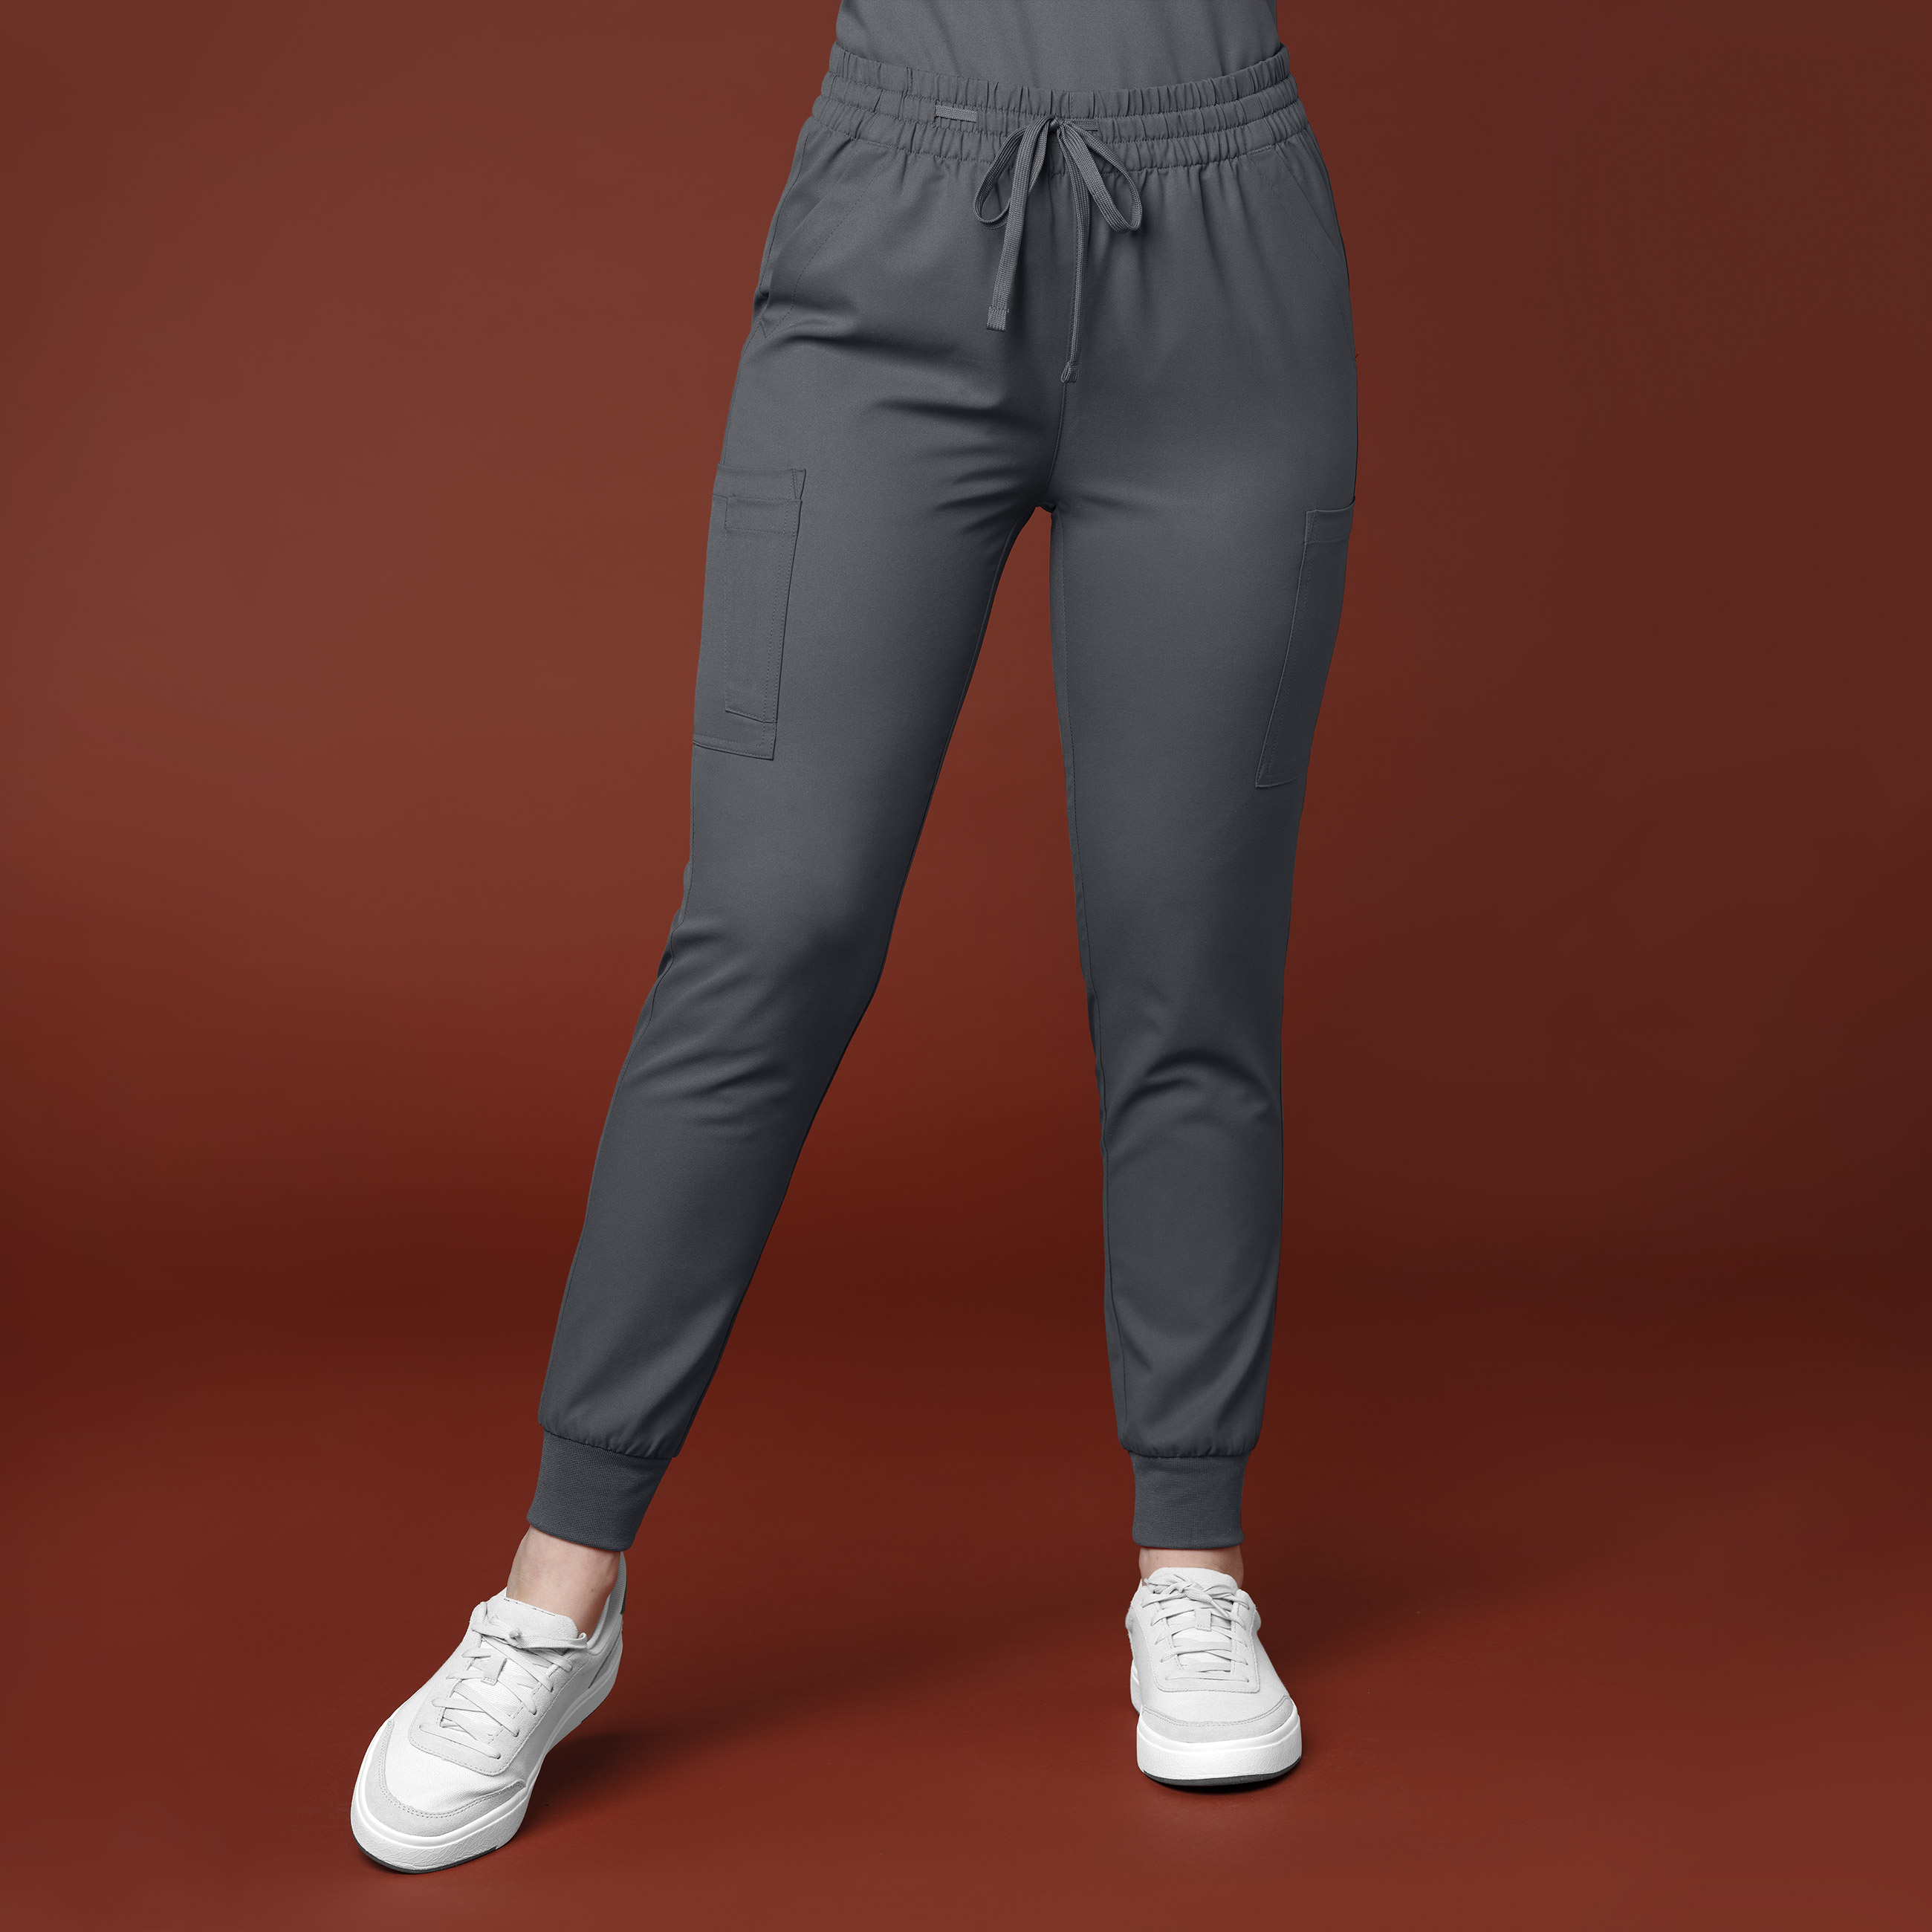 ave Women's Jogger-Style Scrub Pants Charcoal Size 2XL Tall